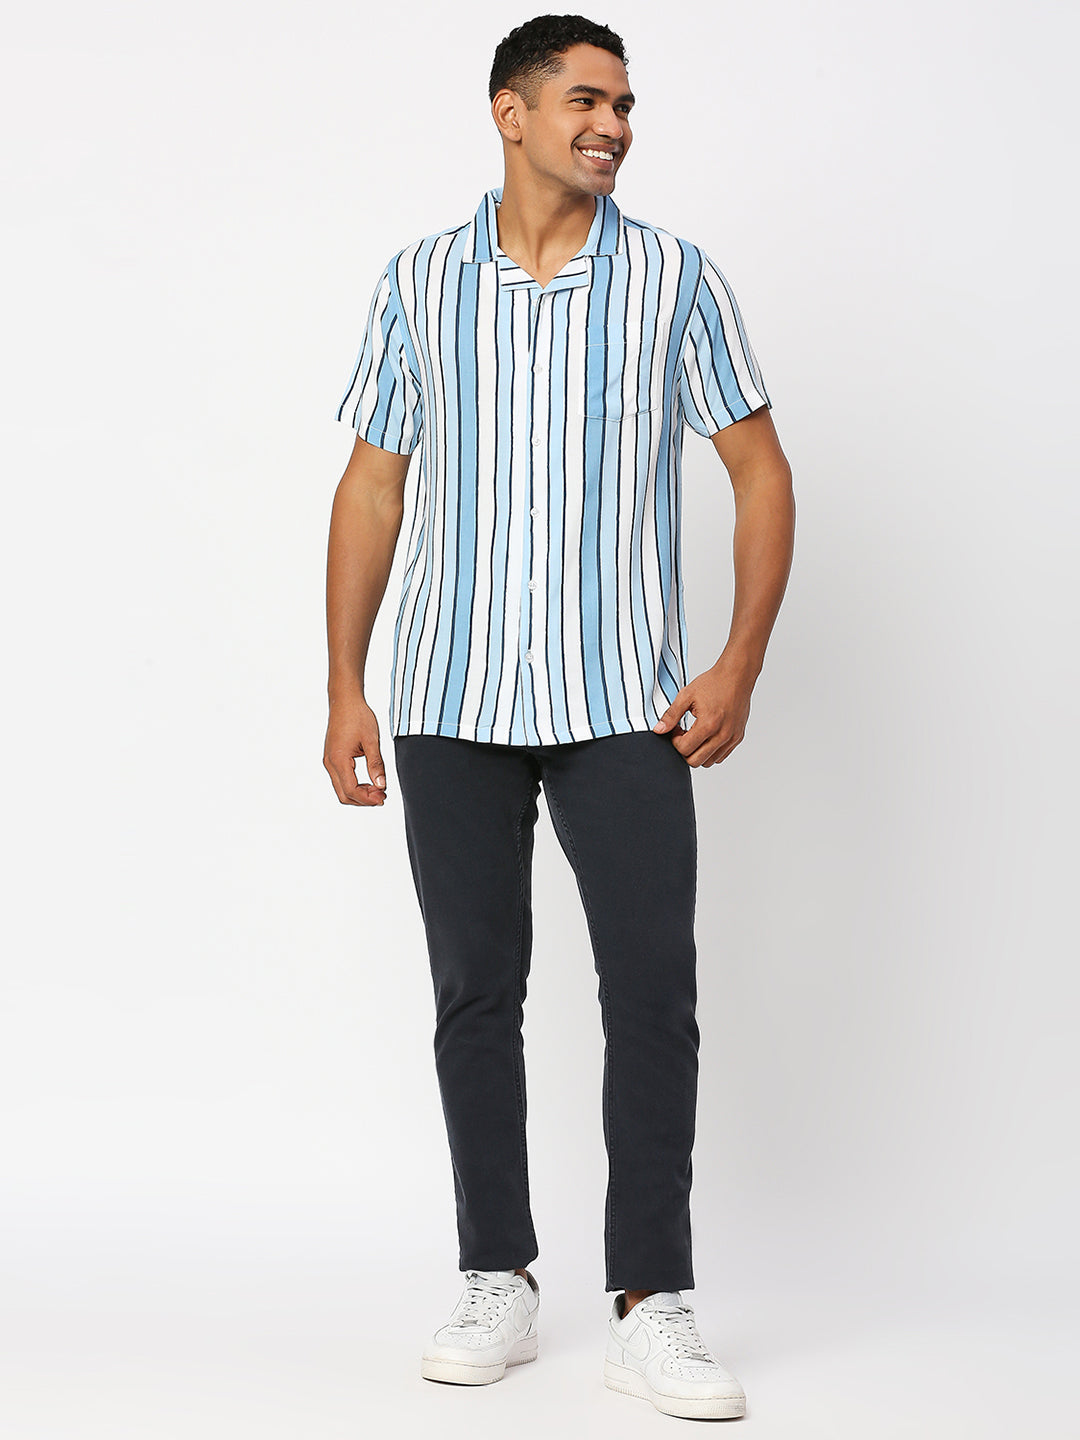 Shaded Stripes Blue Shirt